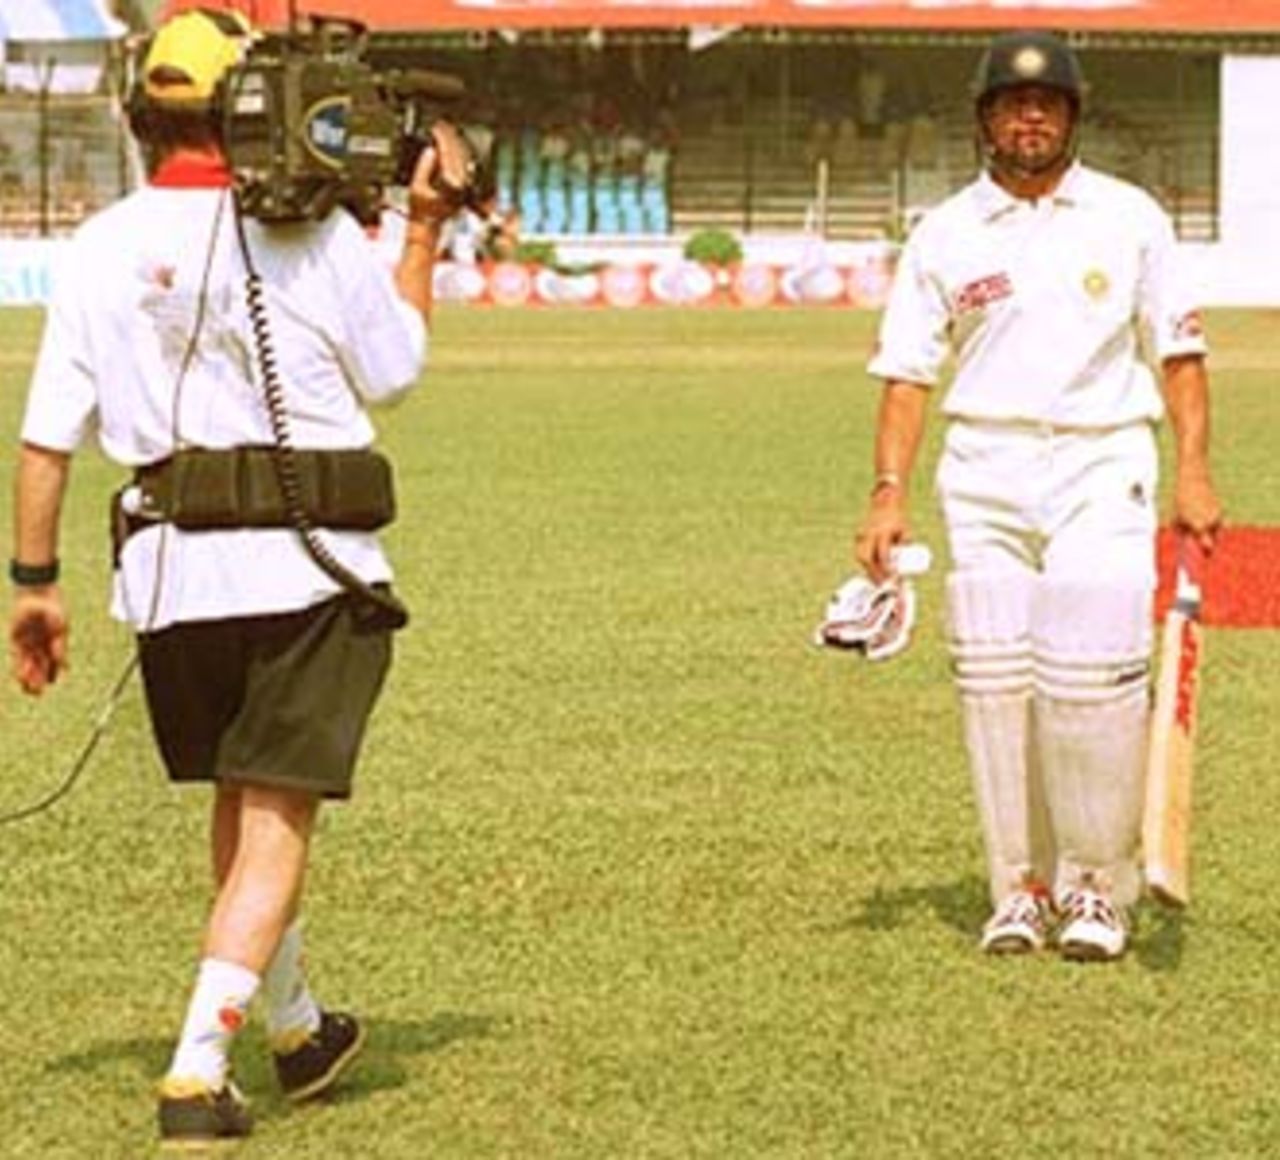 Tendulkar returns back to the pavilion dejected. India in Bangladesh 2000/01, Only Test, Bangladesh v India, Bangabandhu National Stadium, Dhaka, 10-14 Nov 2000 (Day 3)